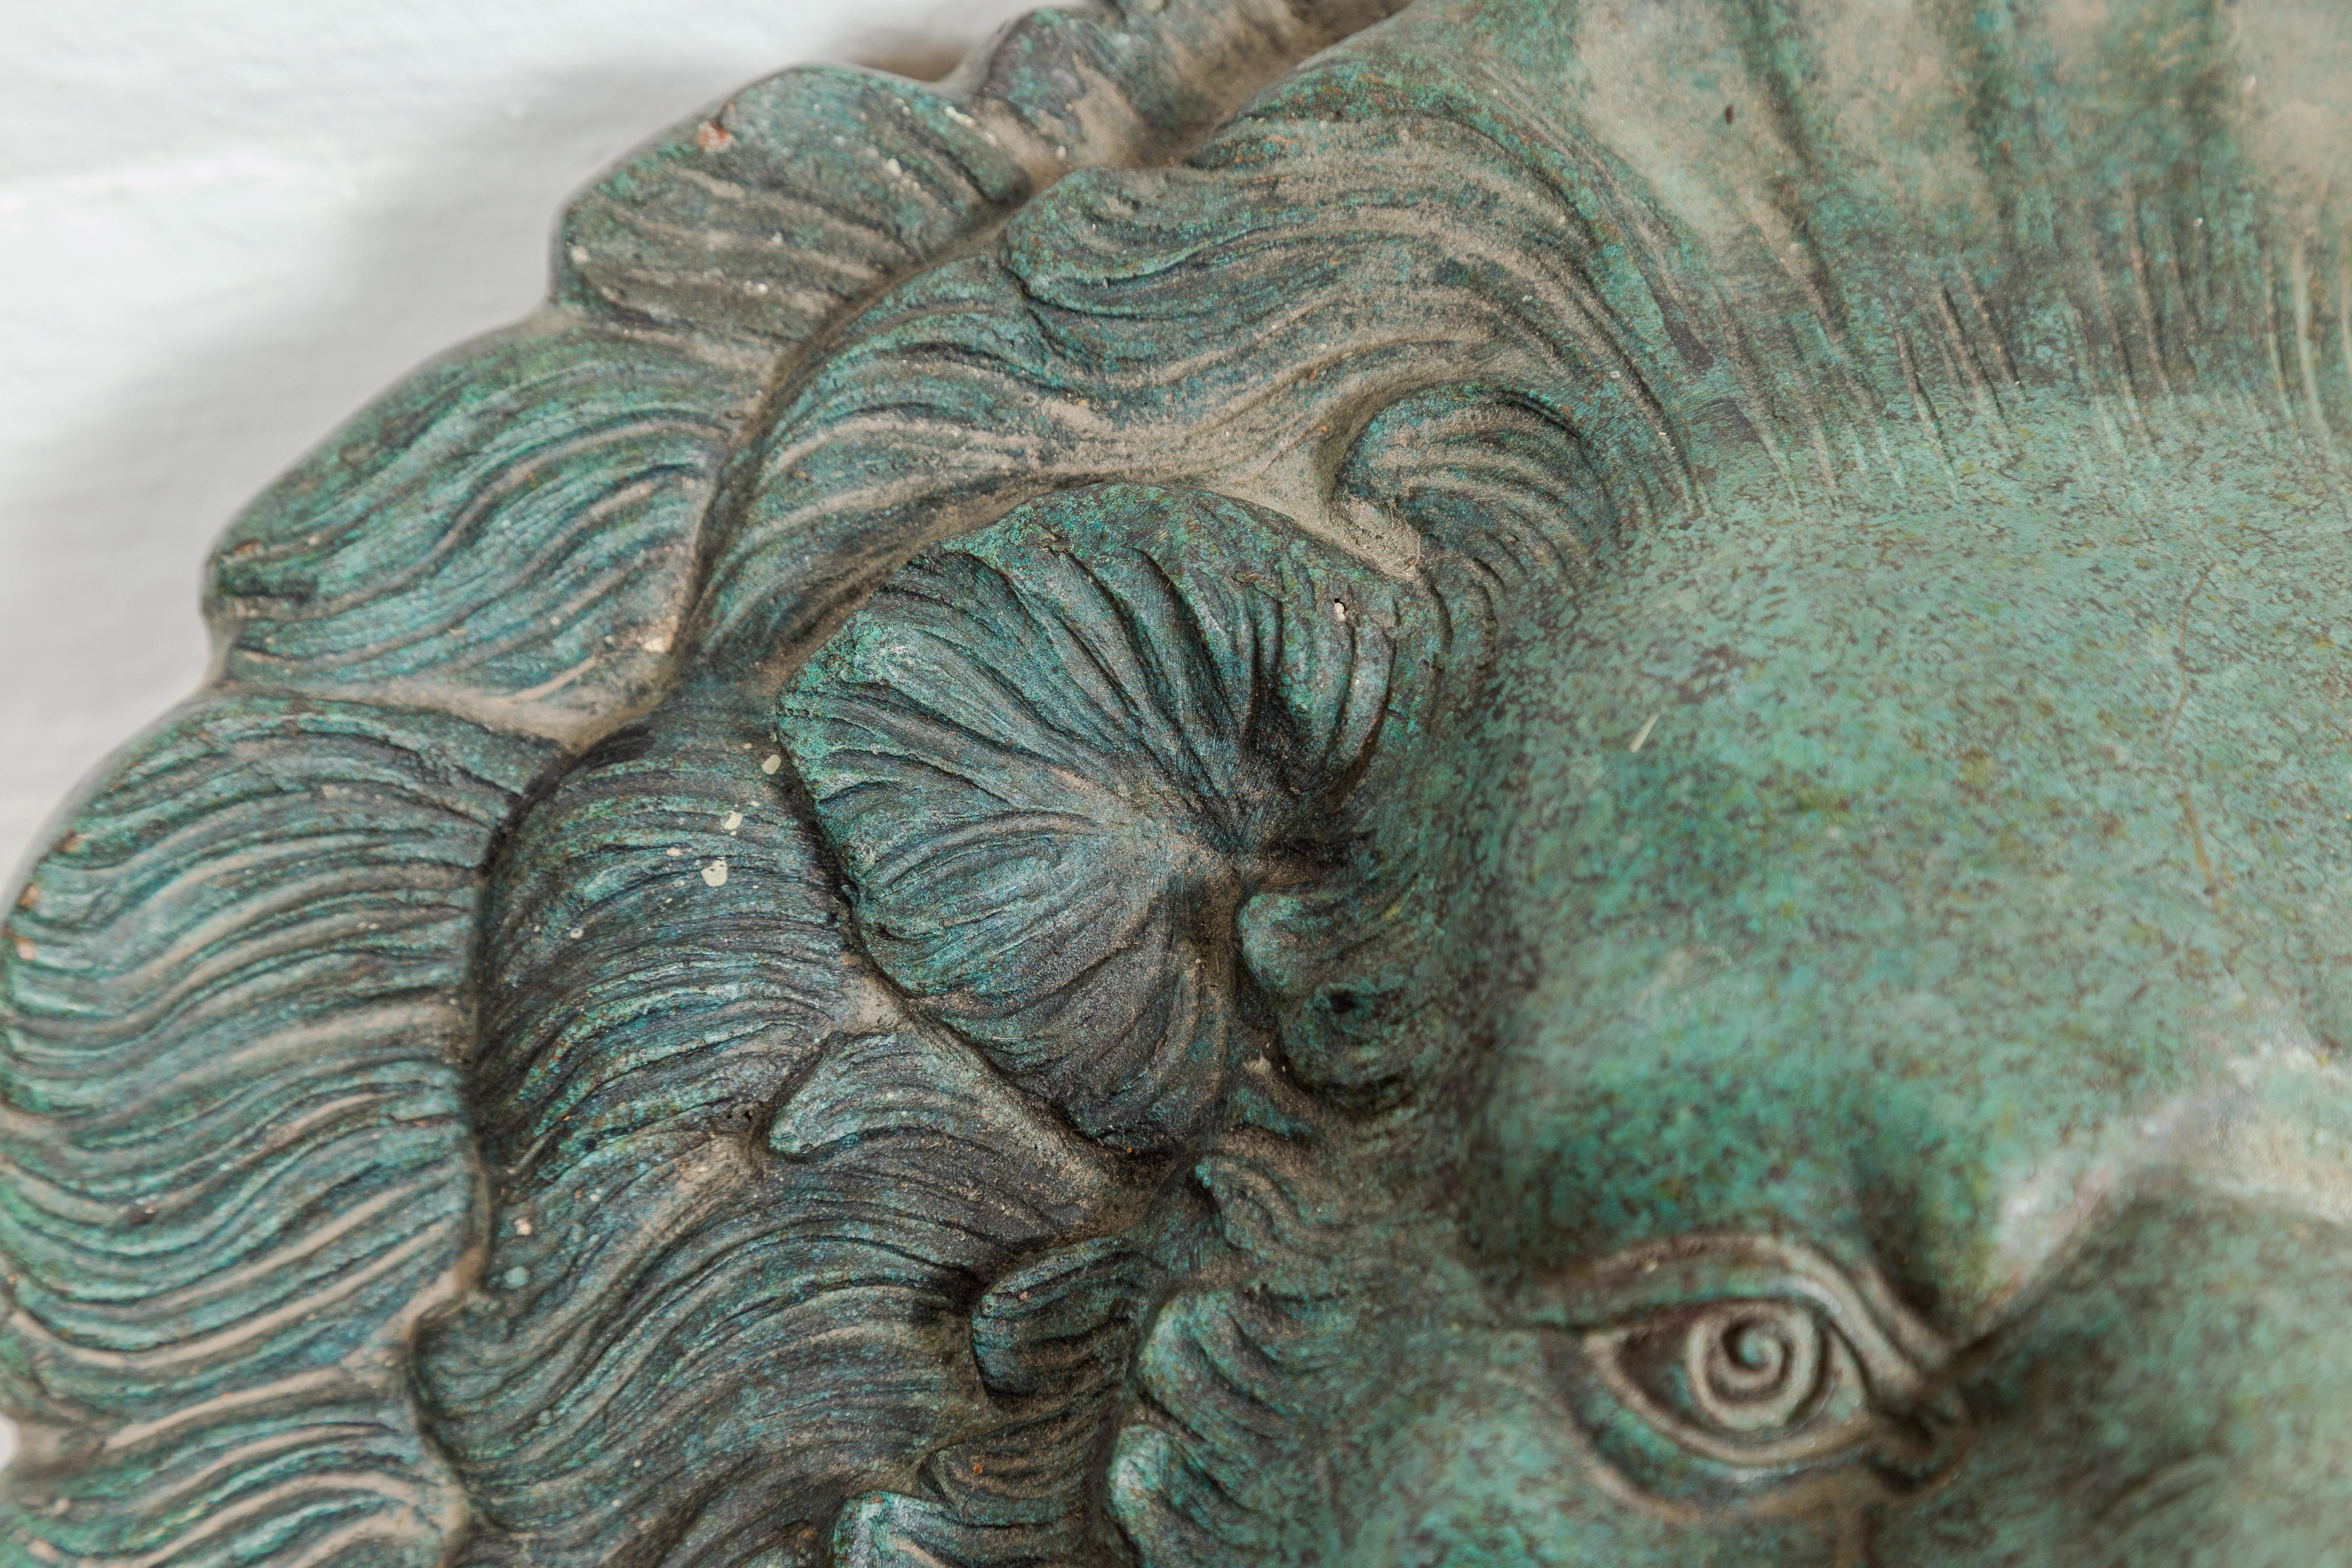 Heraldic Cast Bronze Lion Head Sculpture Tubed as a Fountain, Verdigris Patina 6